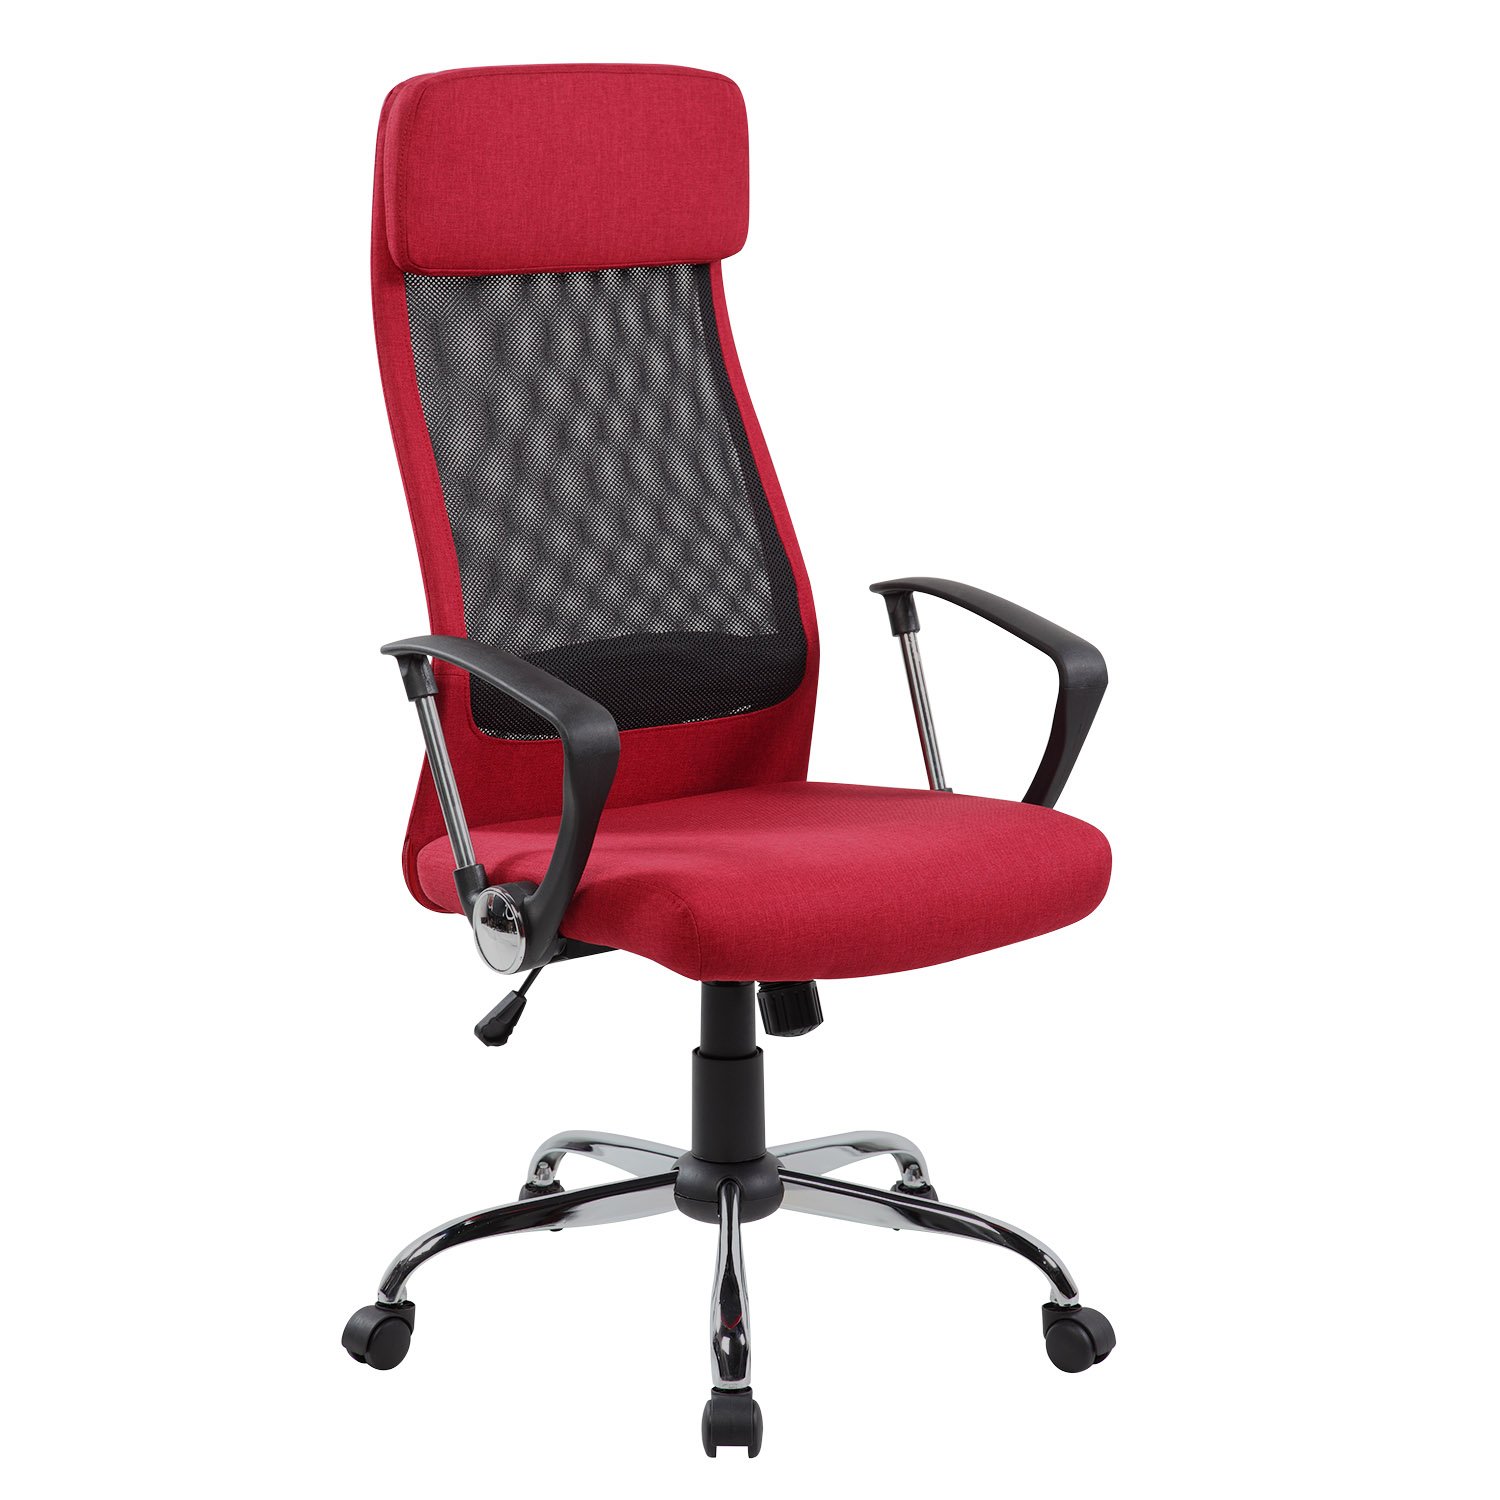 Biuro kėdė DARLA, 62x63x116-126 cm, raudona